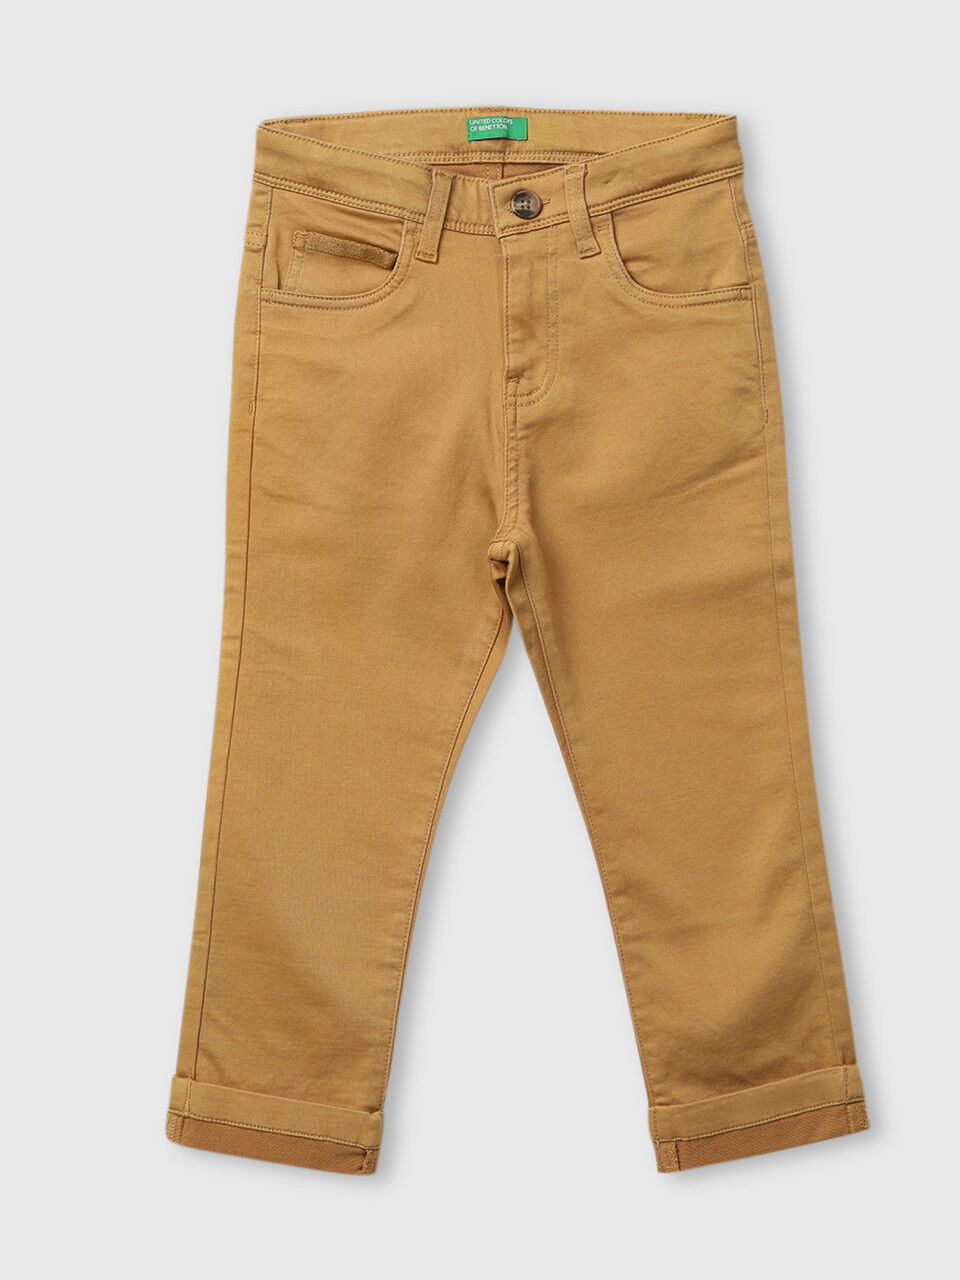 United Colors of Benetton Boy's Pantalone Trouser 